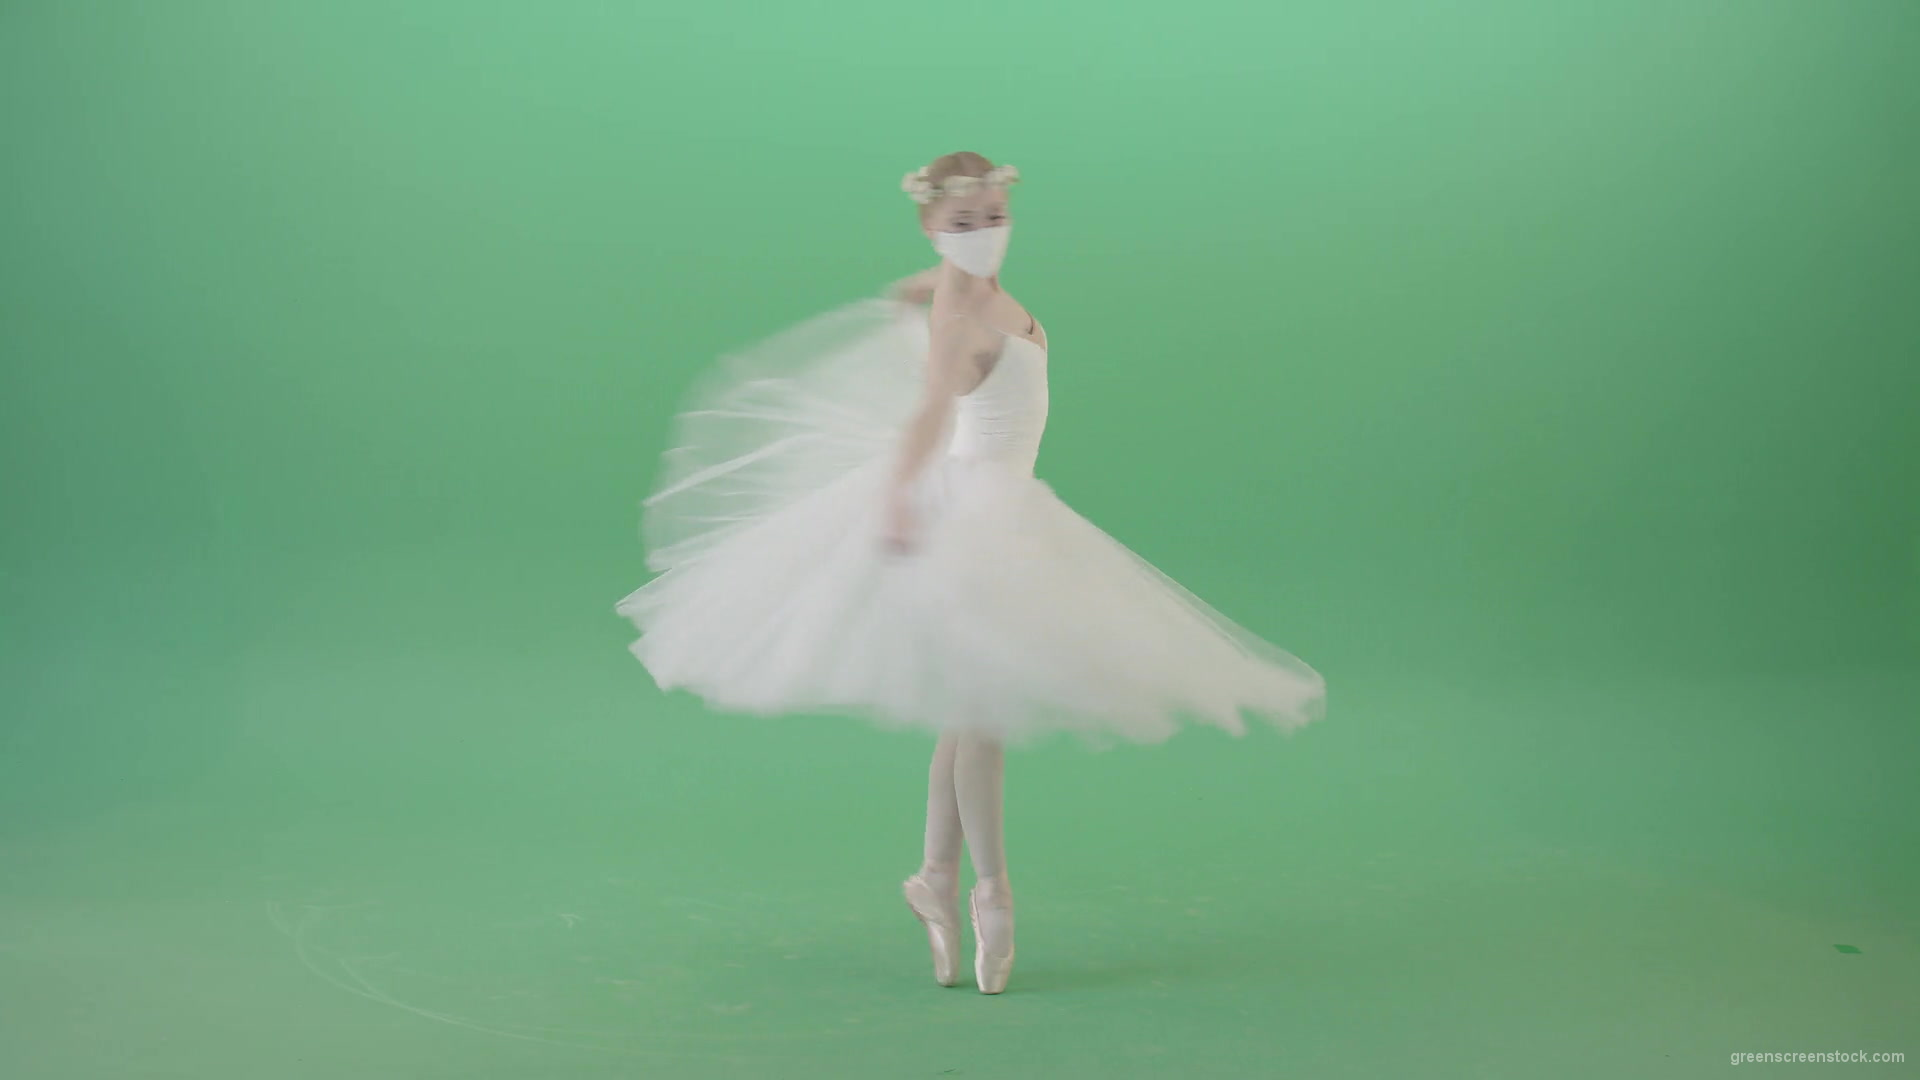 Ballet-Dancing-Girl-in-Corona-Virus-Mask-spinning-on-green-screen-4K-Video-Footage-1920_004 Green Screen Stock